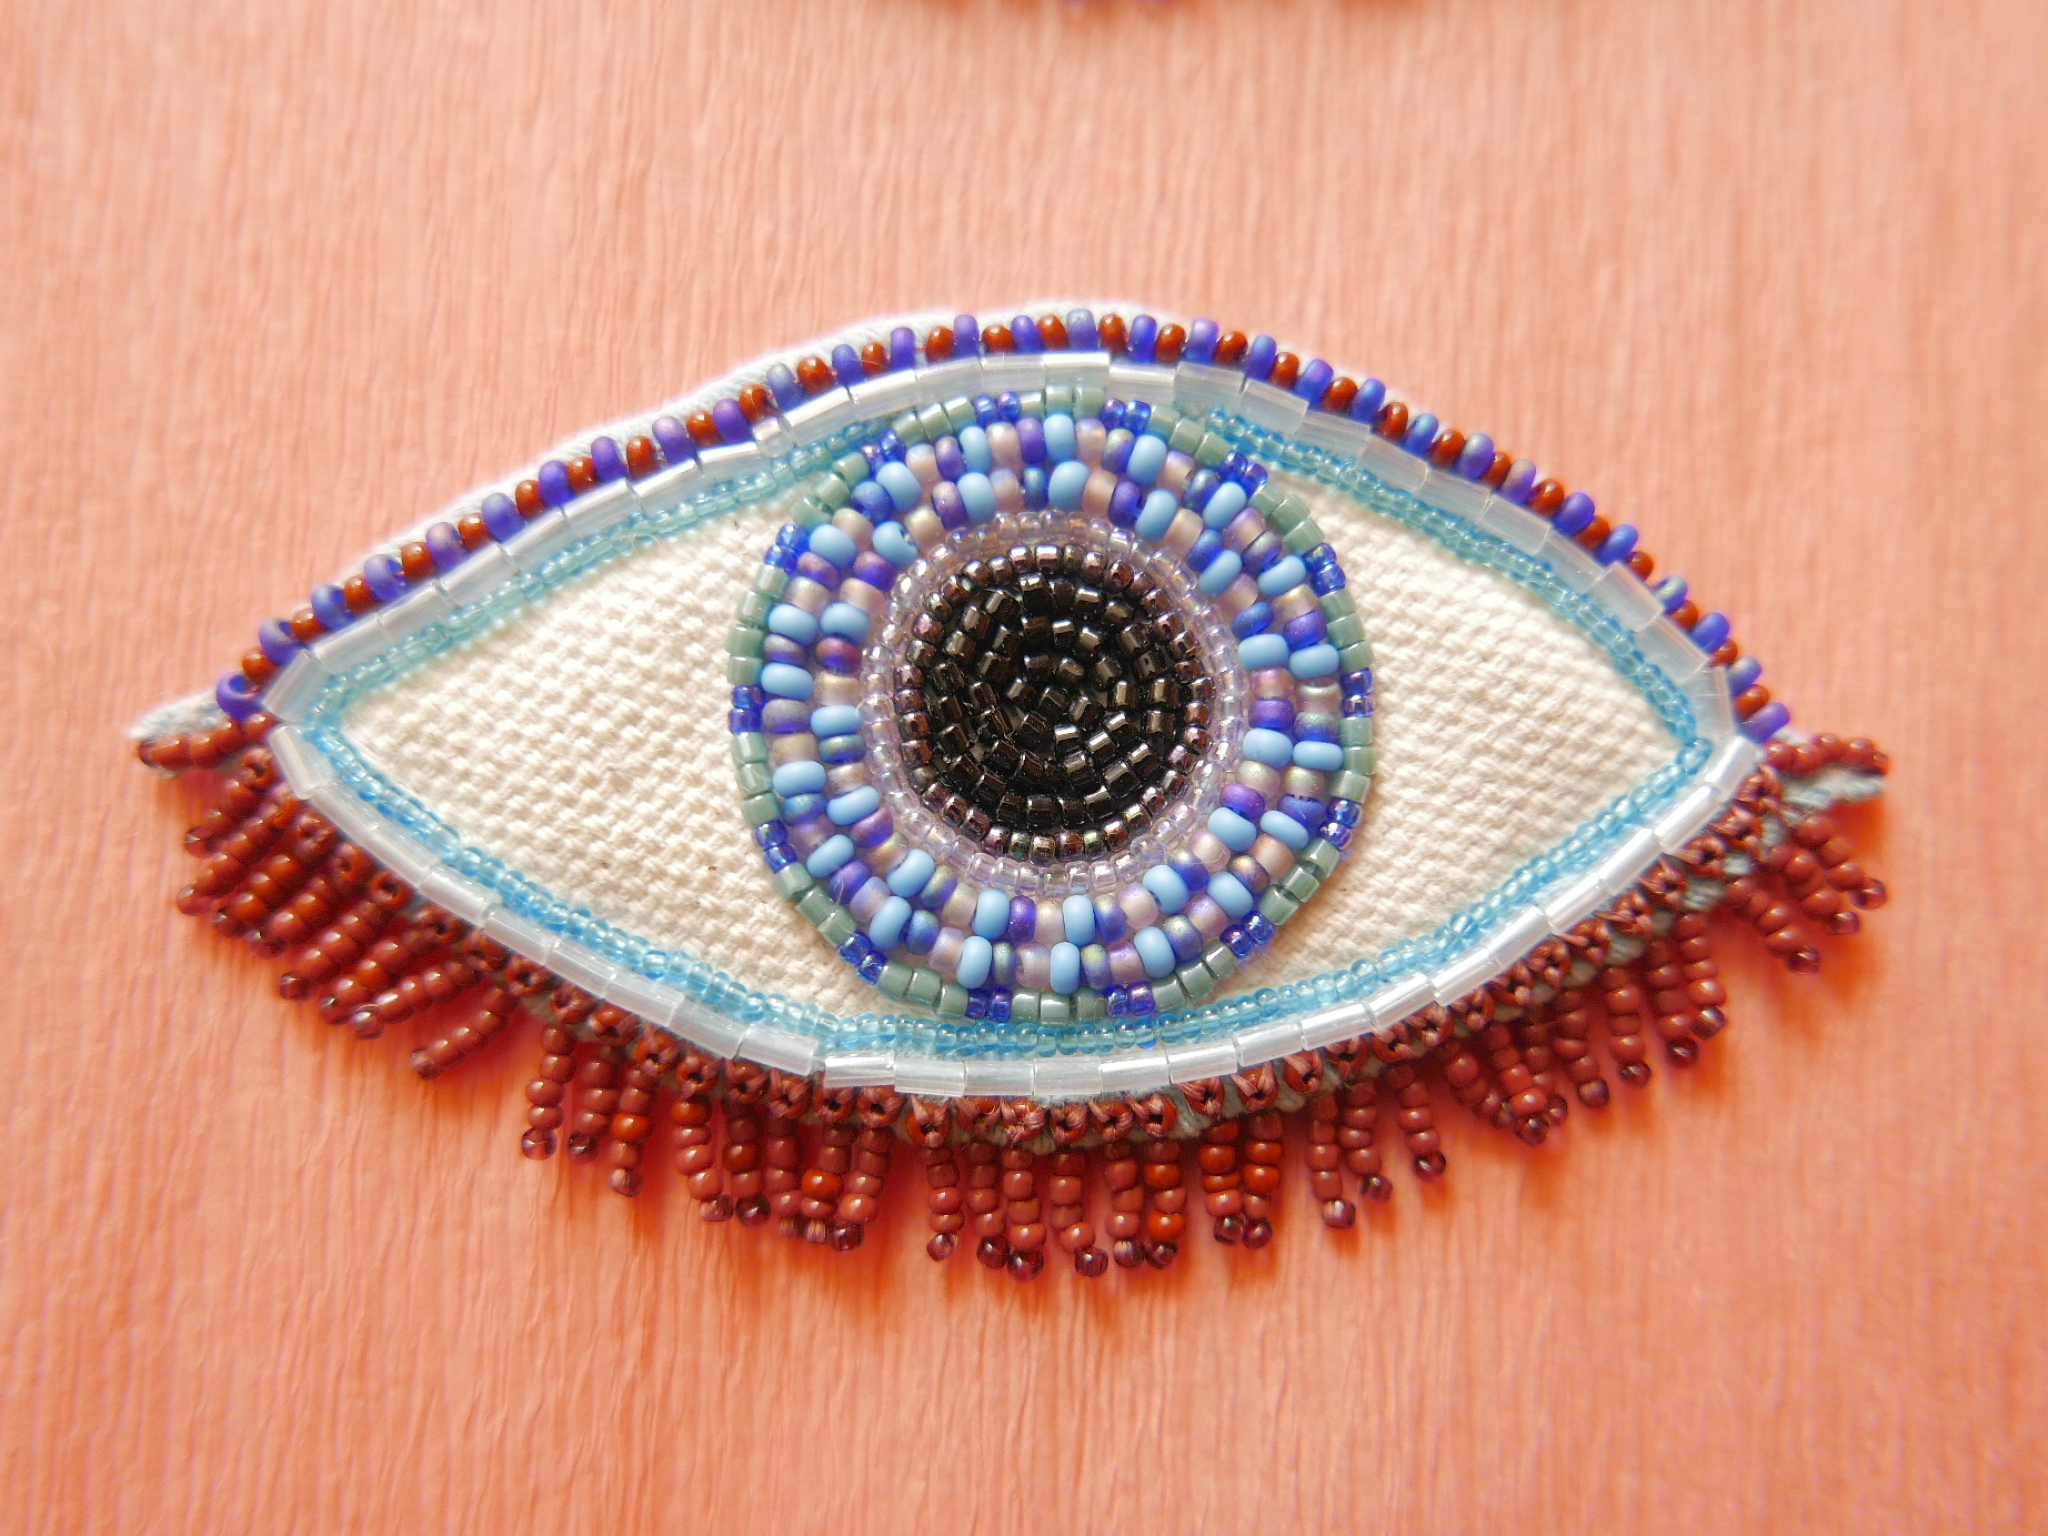 Patch - 'Titi Blue' a handmade patch with glass beads. - Justyna Woodkiewicz 2050x1540